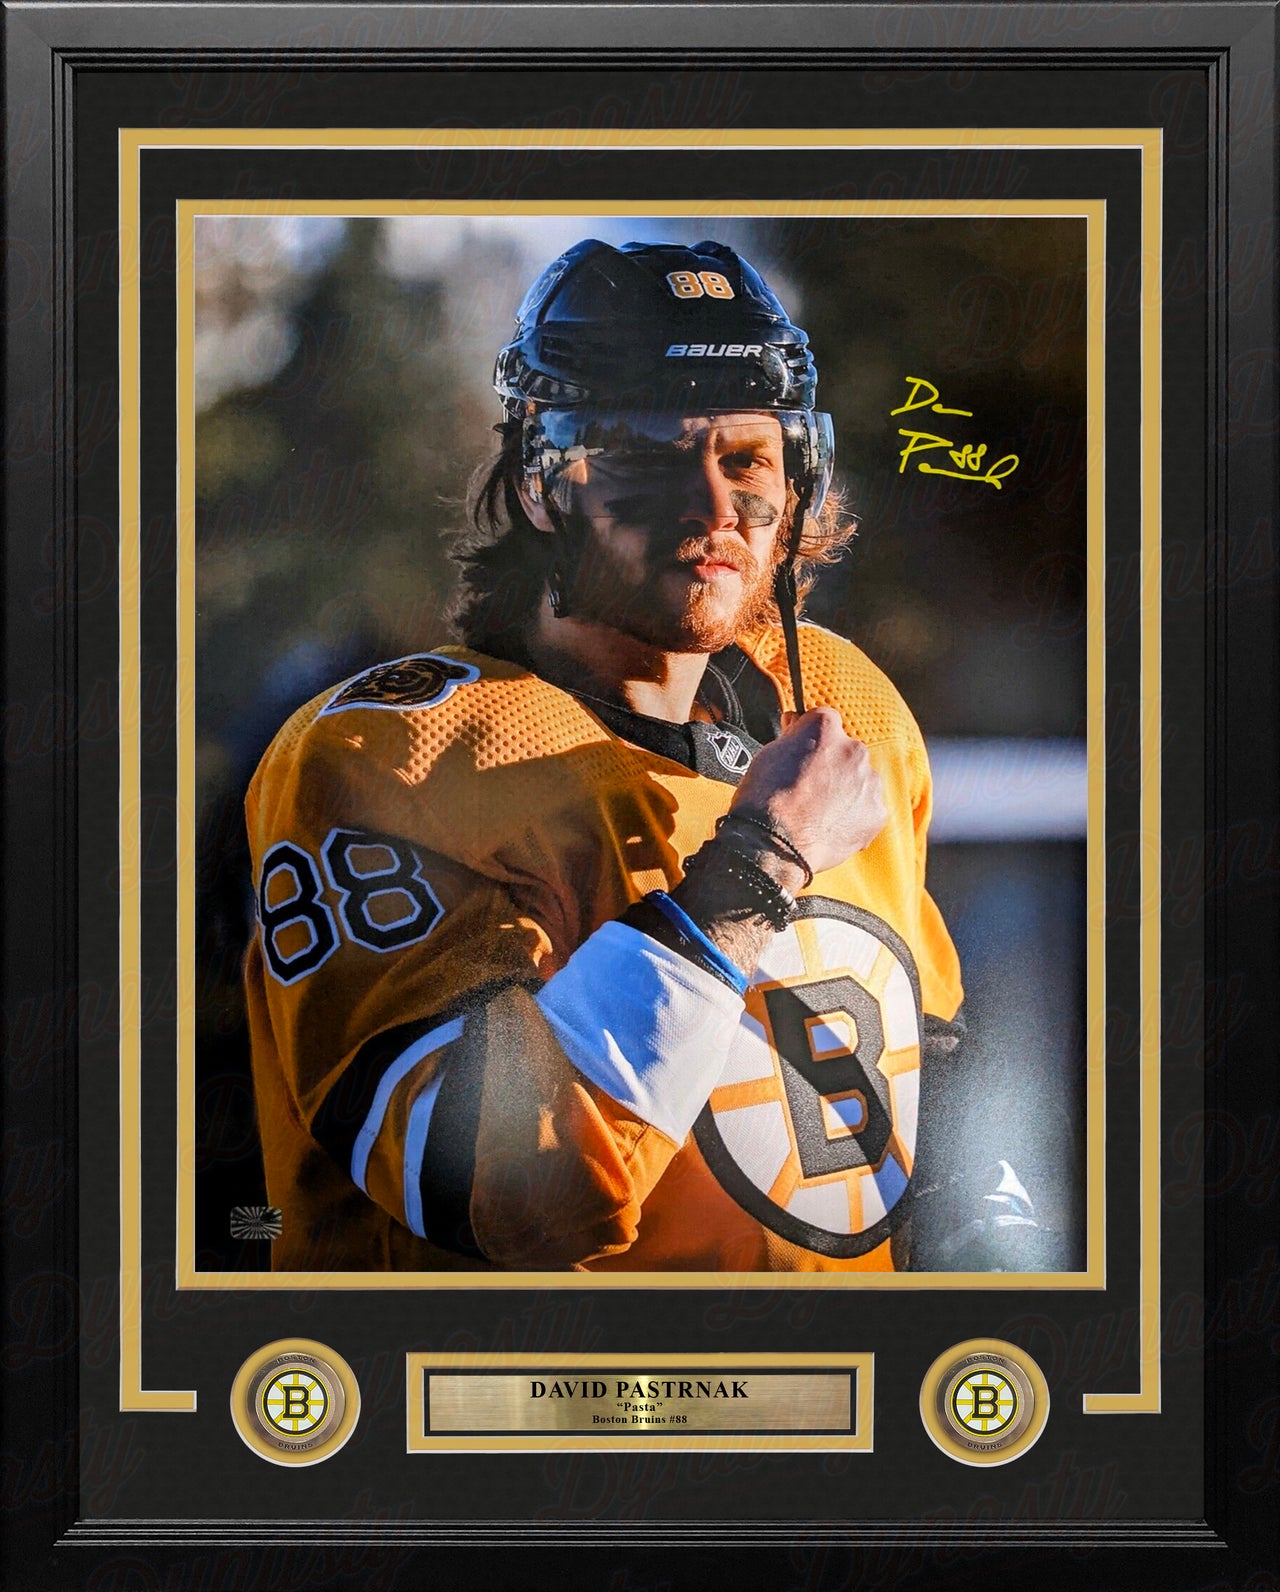 David Pastrnak Lake Tahoe Close-Up Autographed Boston Bruins 16" x 20" Framed Hockey Photo